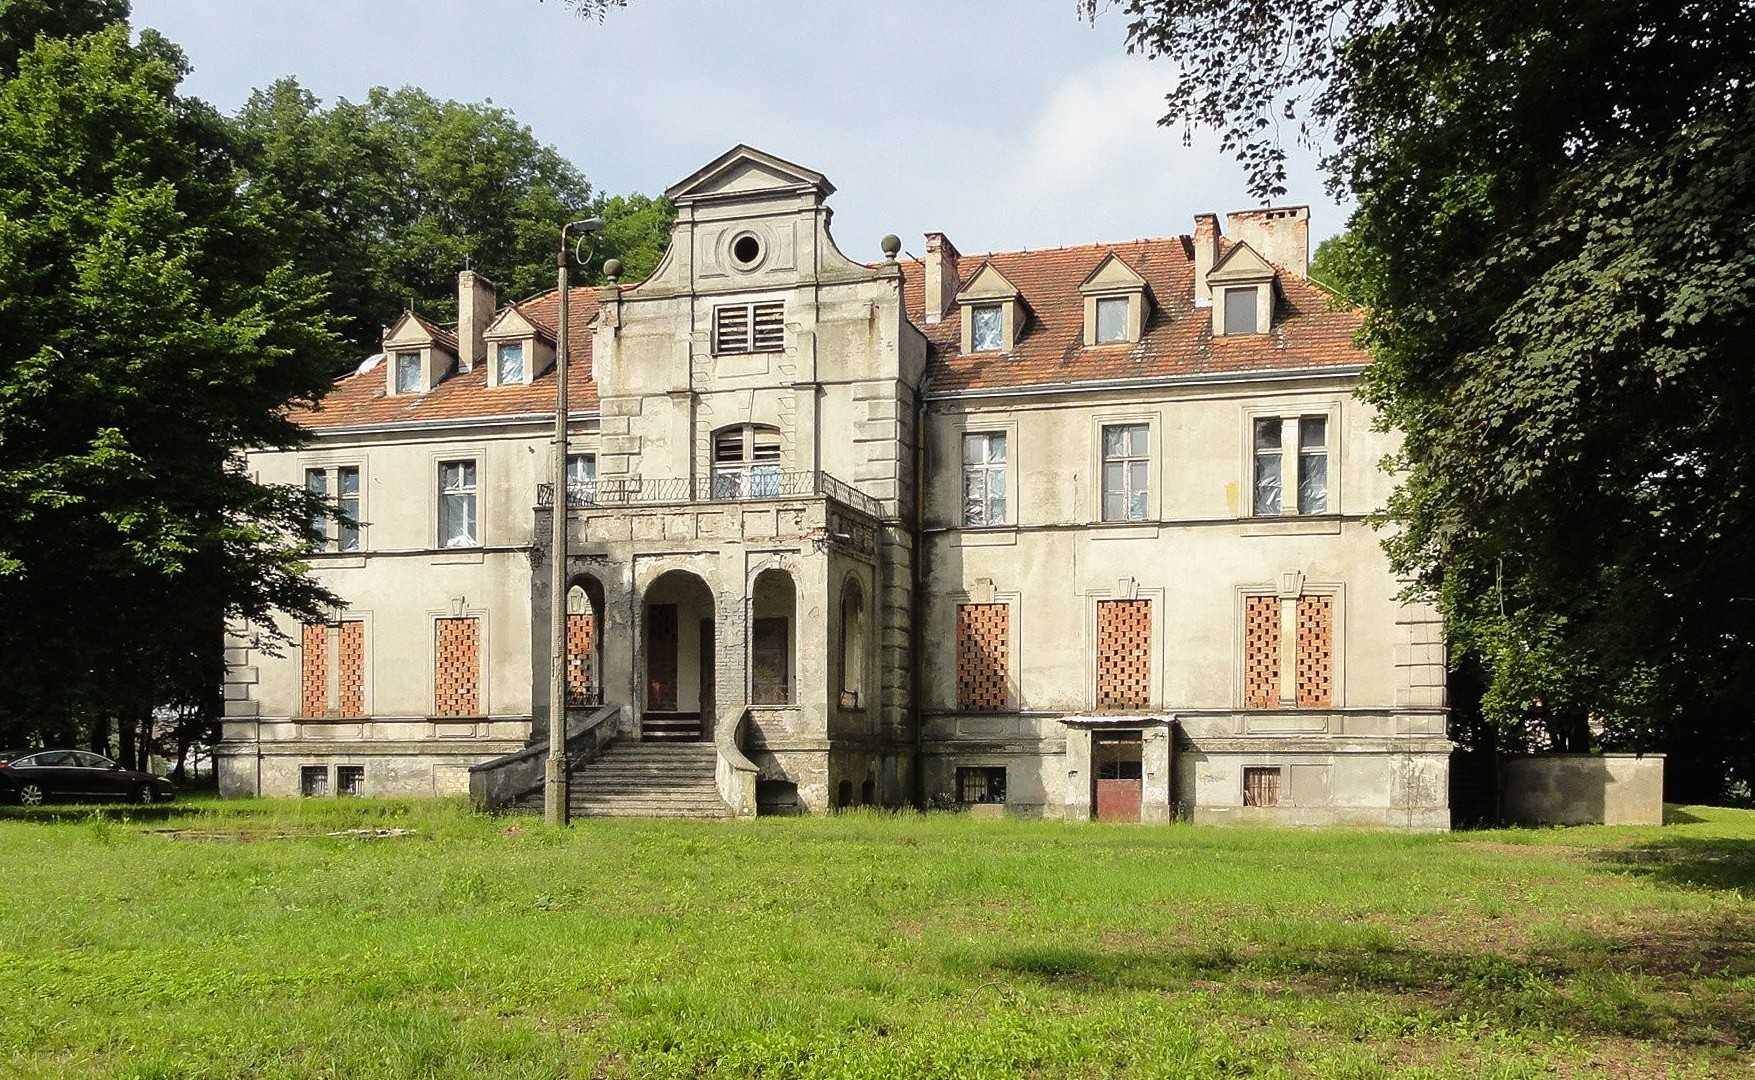 Fotos Castillo en Silesia en venta, Gwoździany